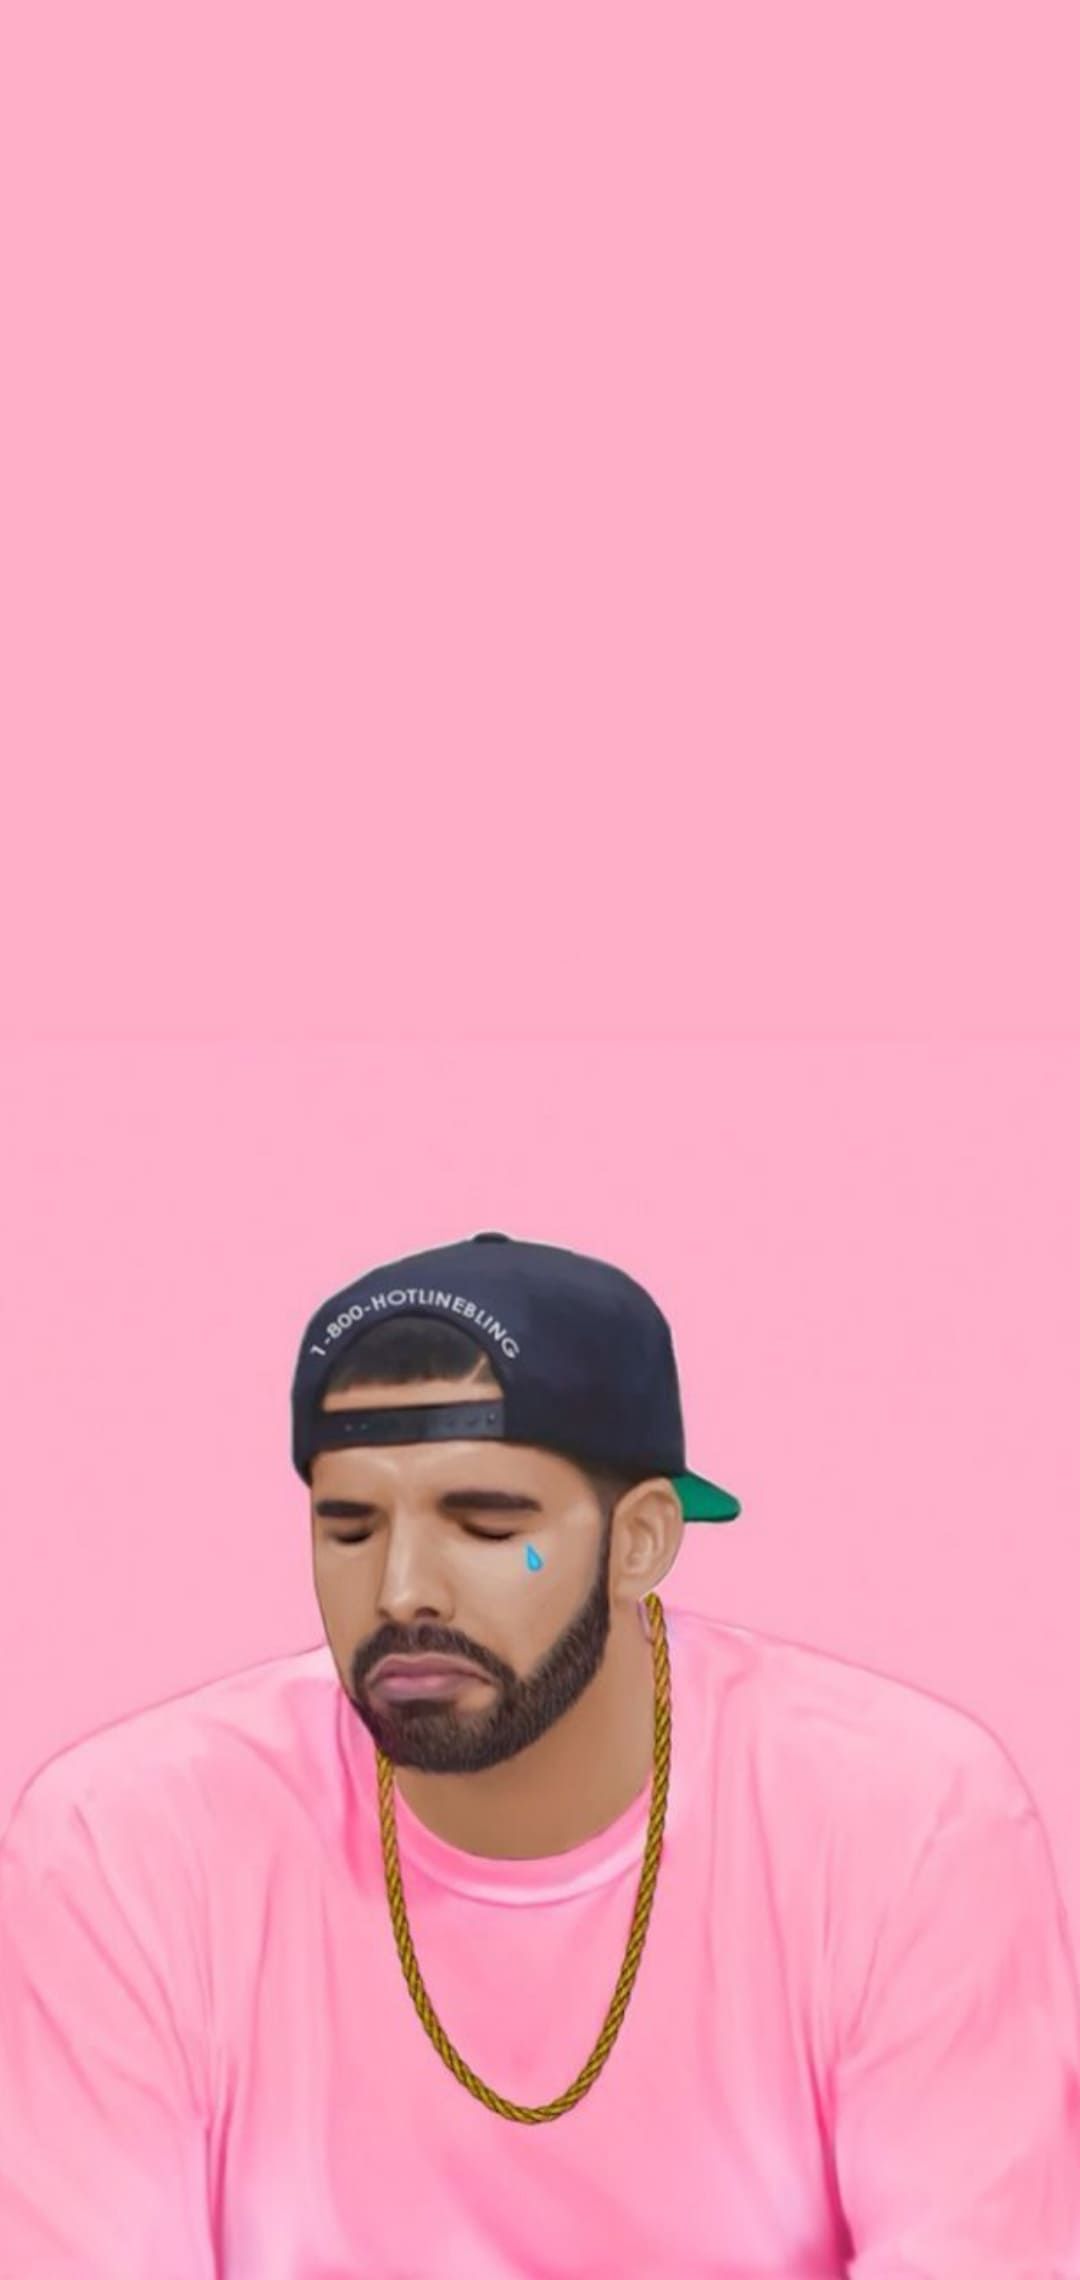 Drake Wallpaper Top Best HD Picture Of Drake 2020 Wallpaper. Wallpaper Of Music